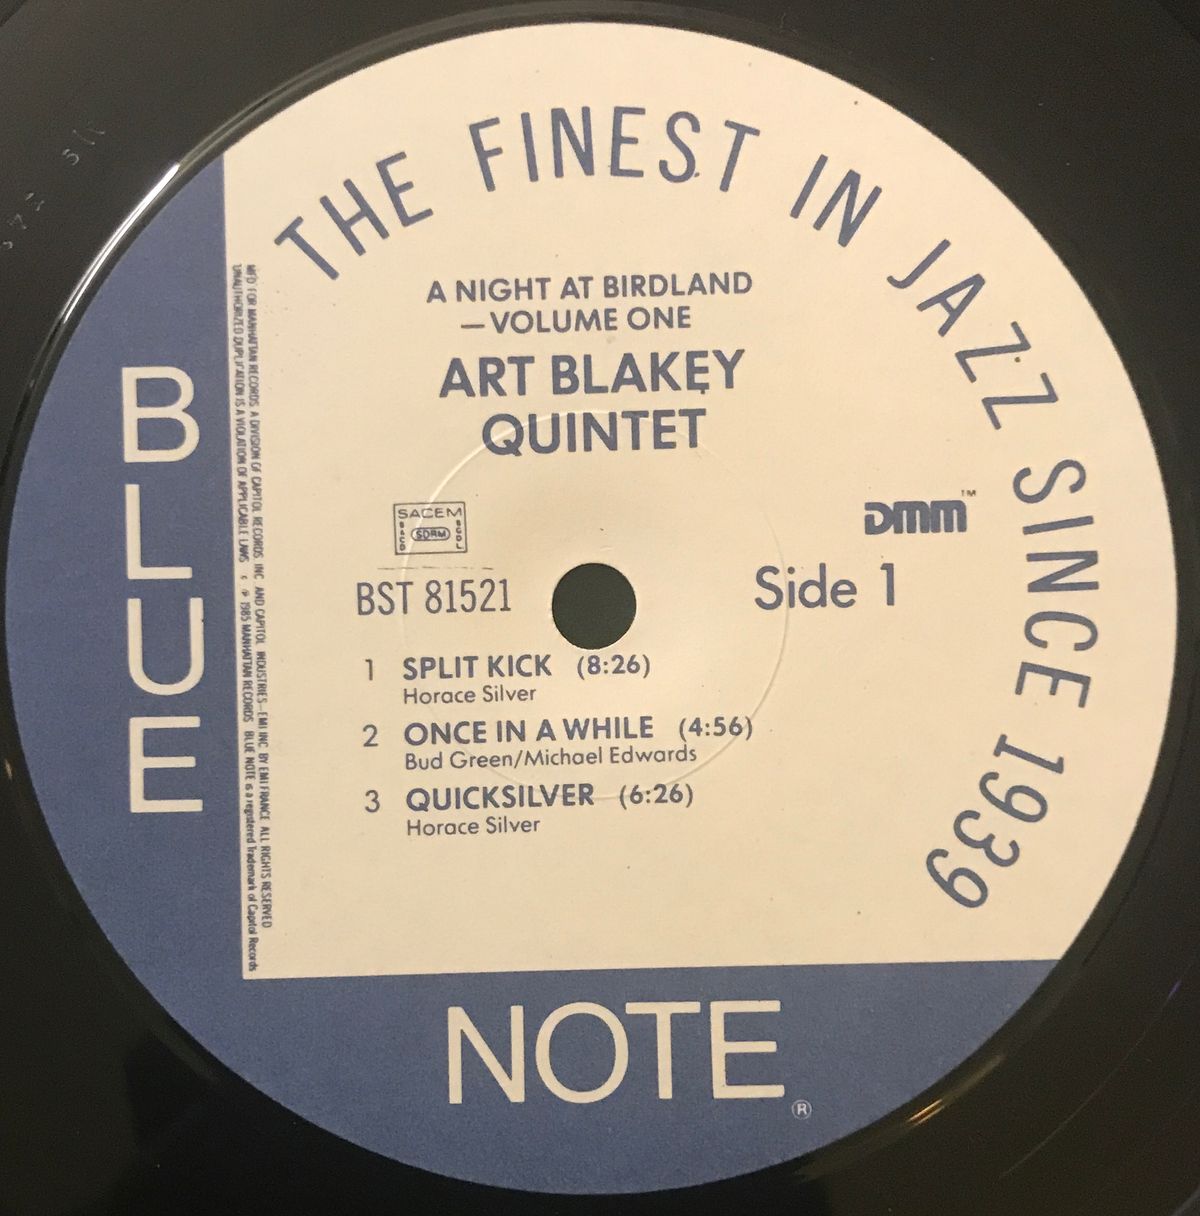 Used　At　A　Volume　Night　Blakey　Quintet　Birdland,　Art　Record　Vinyl　LP